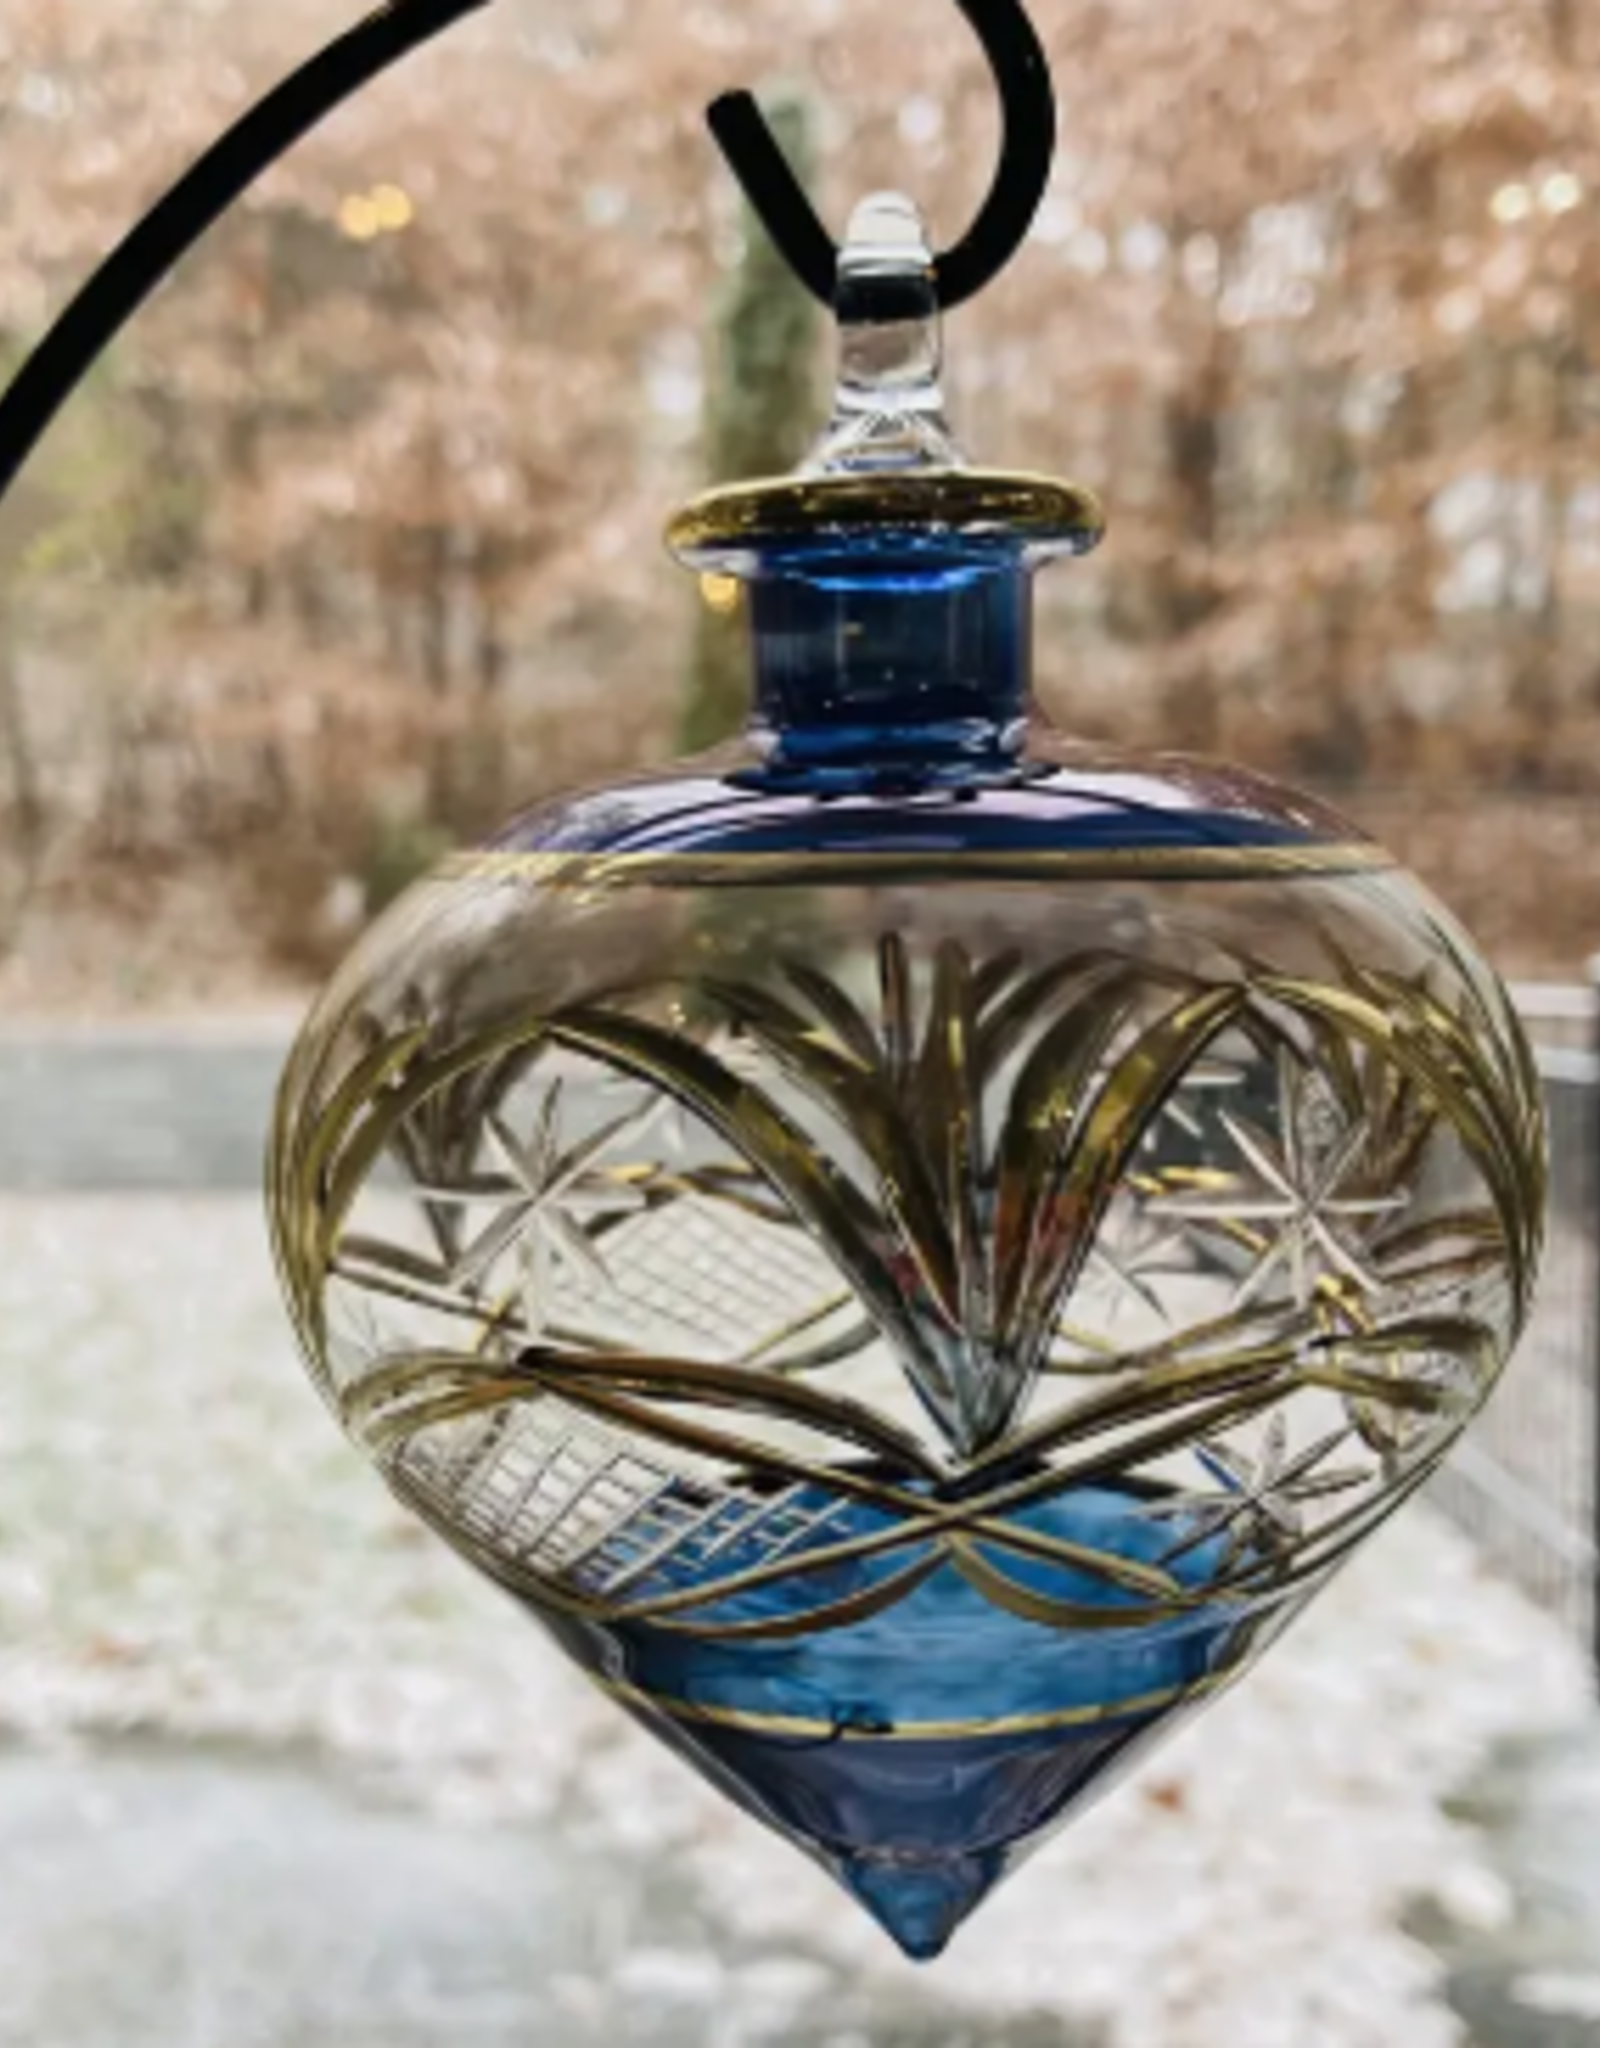 Dandarah Blown Glass Ornament - Drop Blue